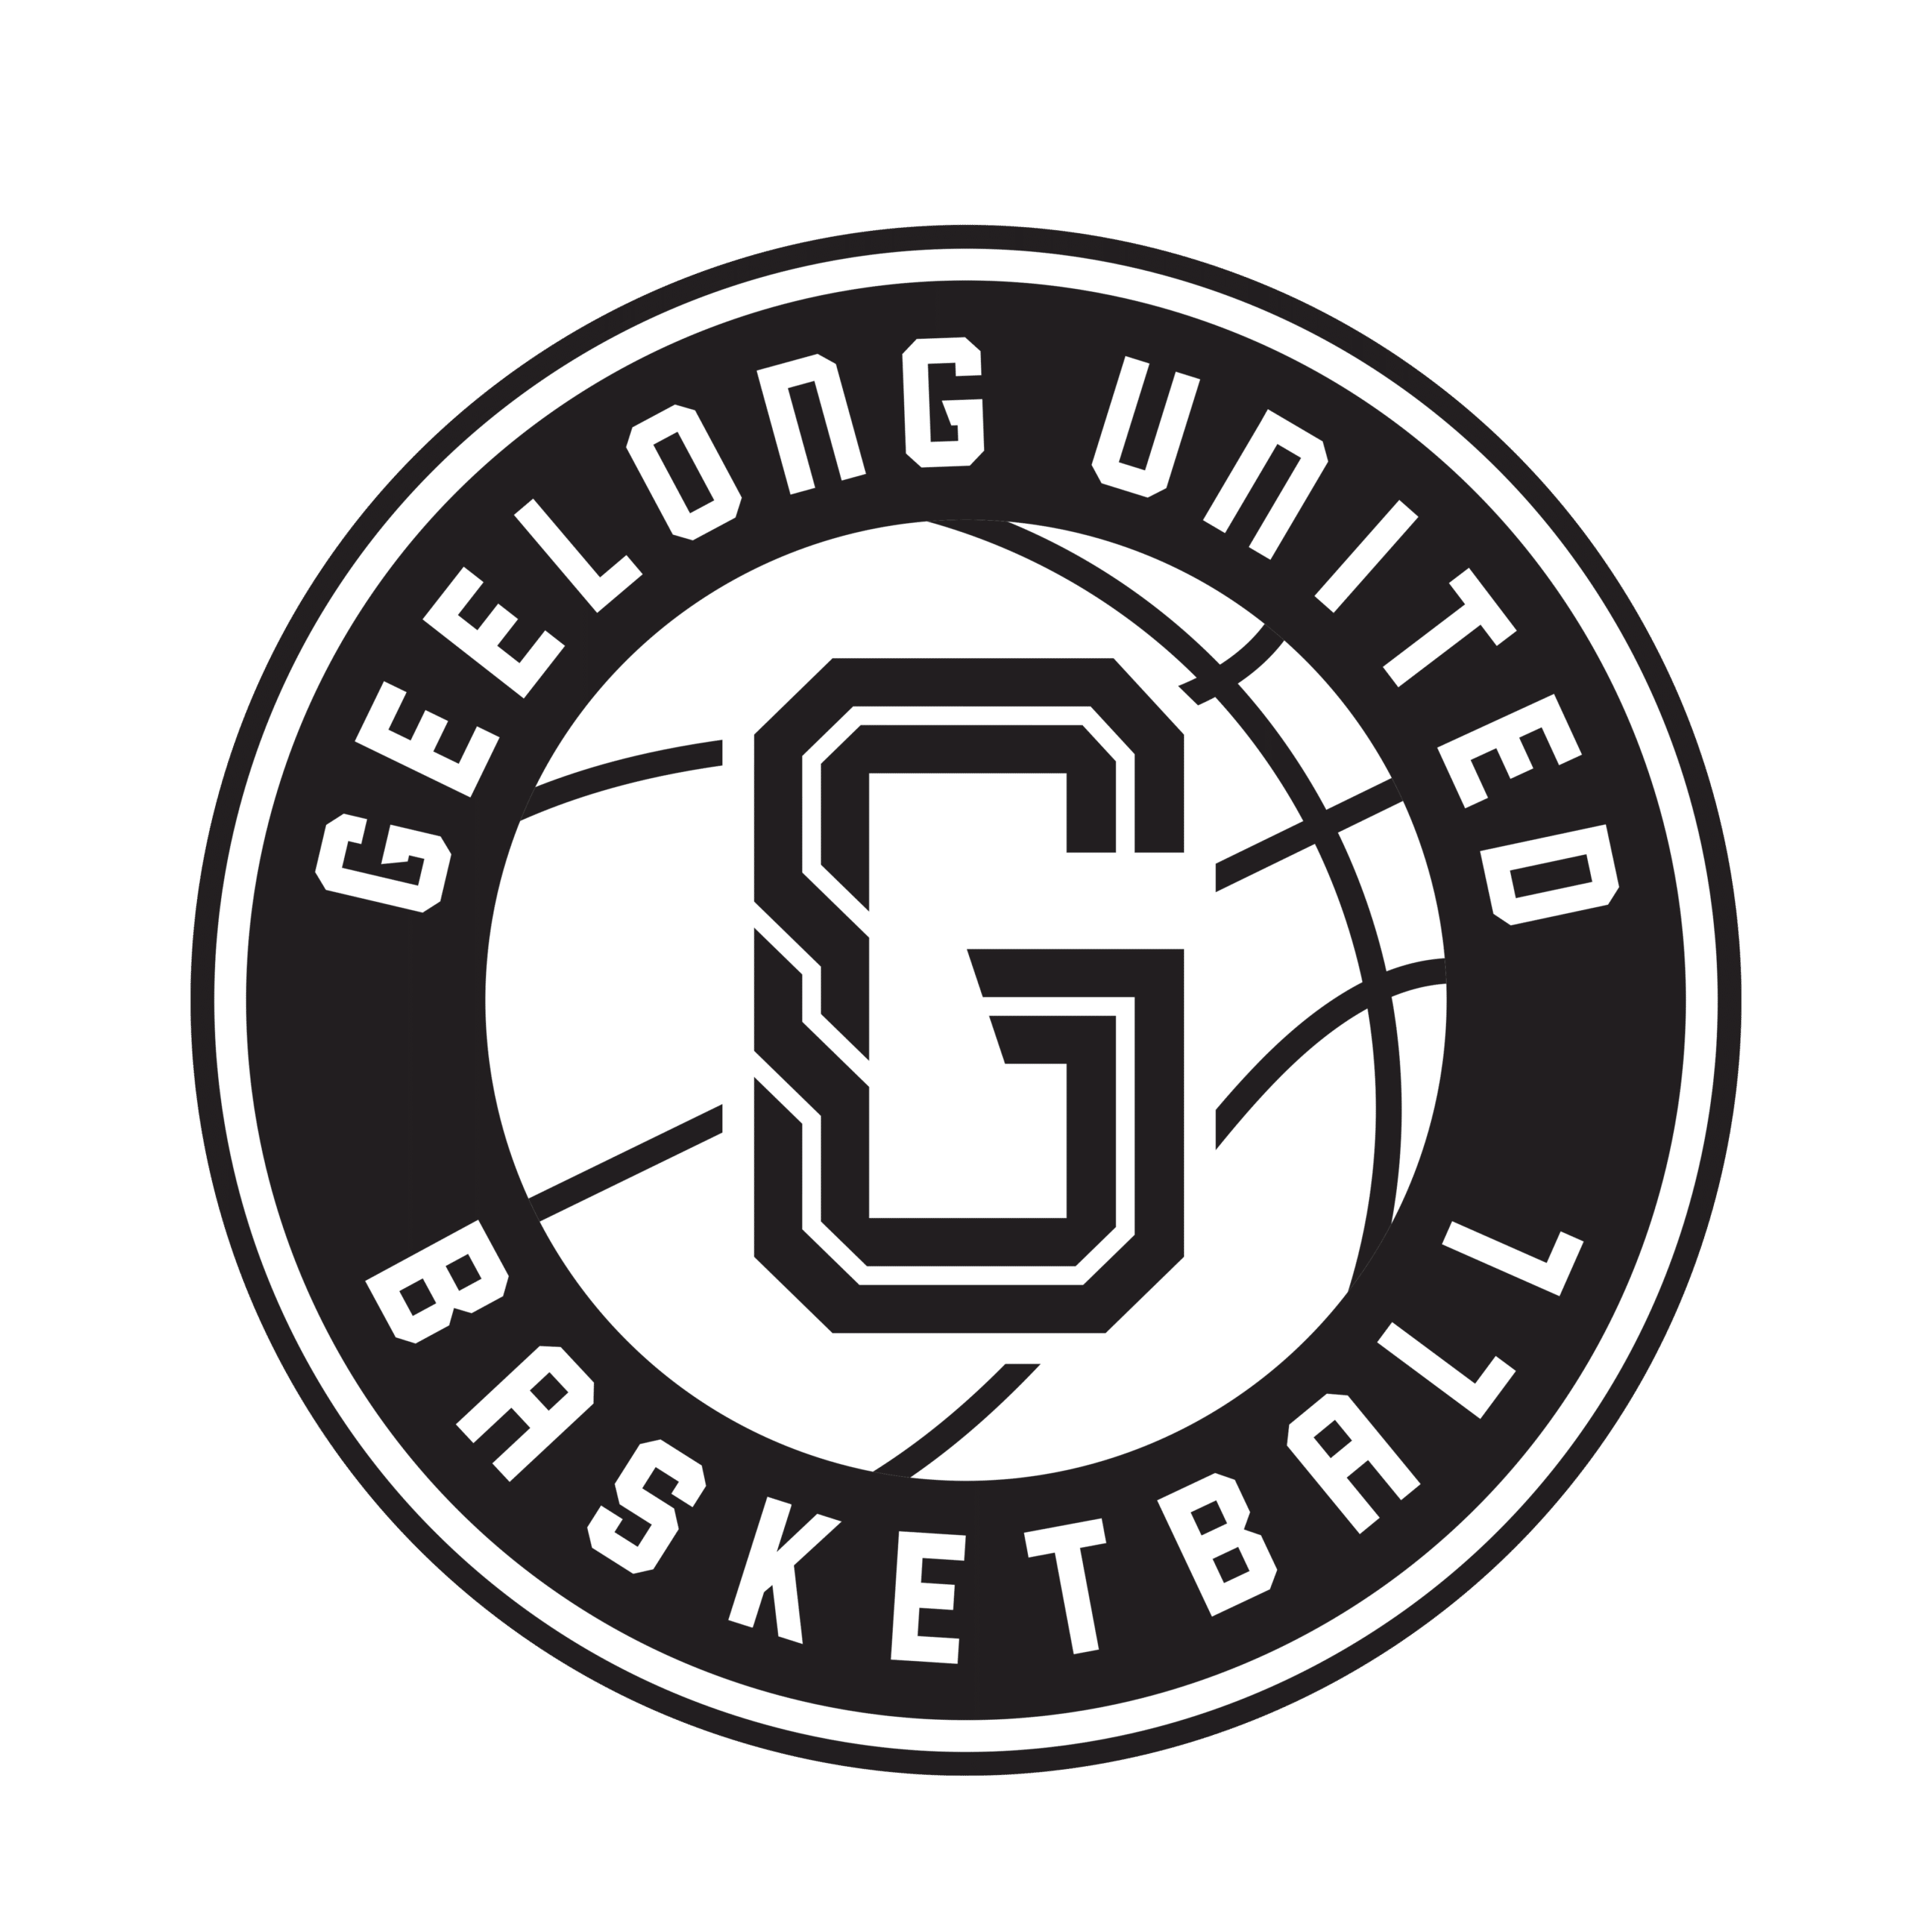 Geelong united basketball logo